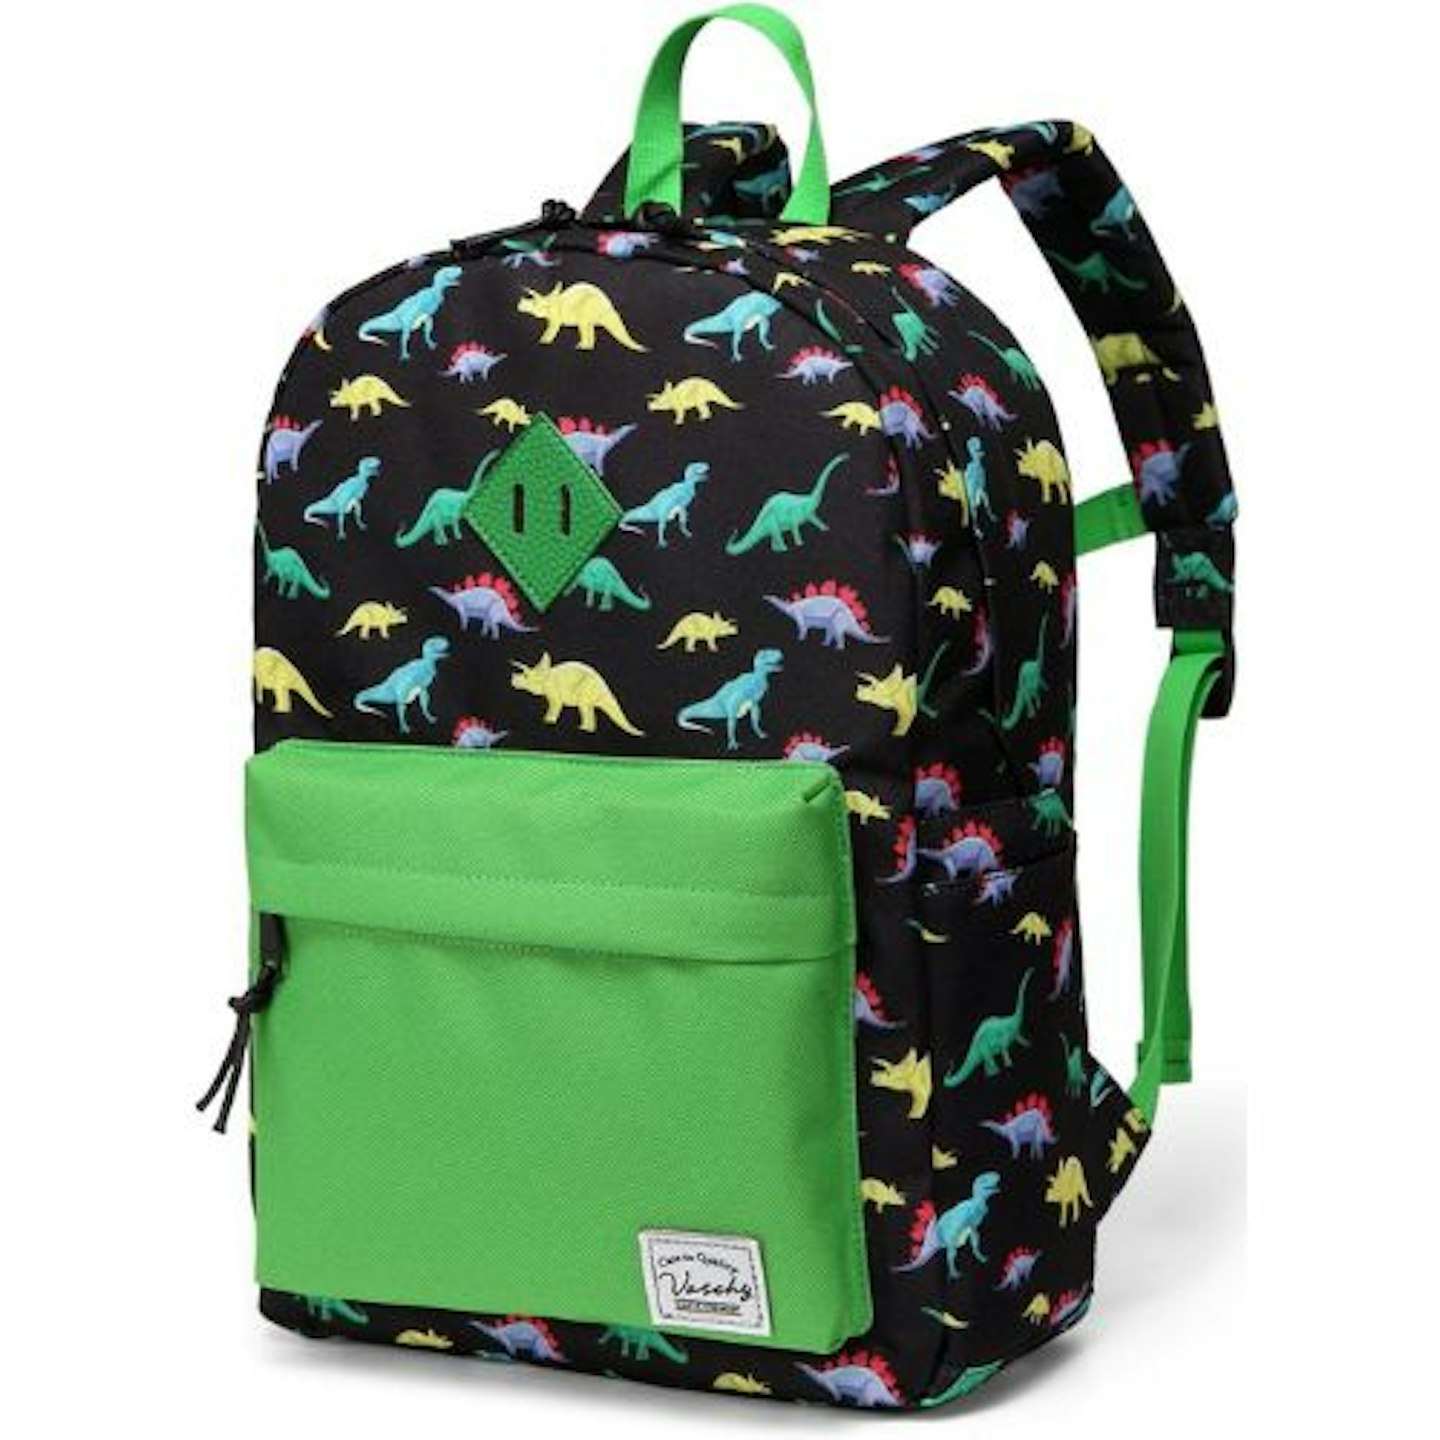 Best back to school backpacks VASCHY Kids Dinosaur Backpack